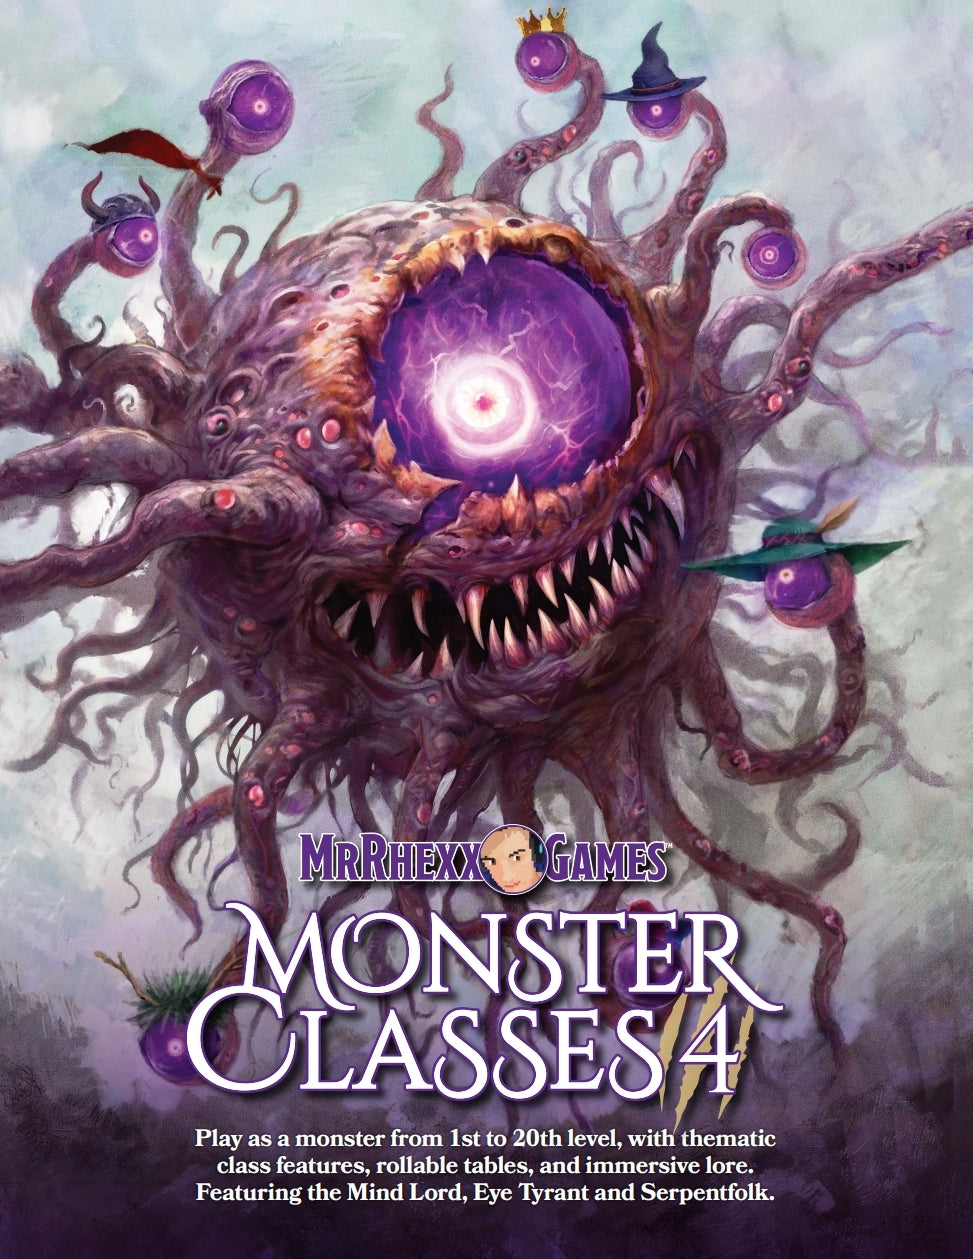 MrRhexx's Monster Classes IV